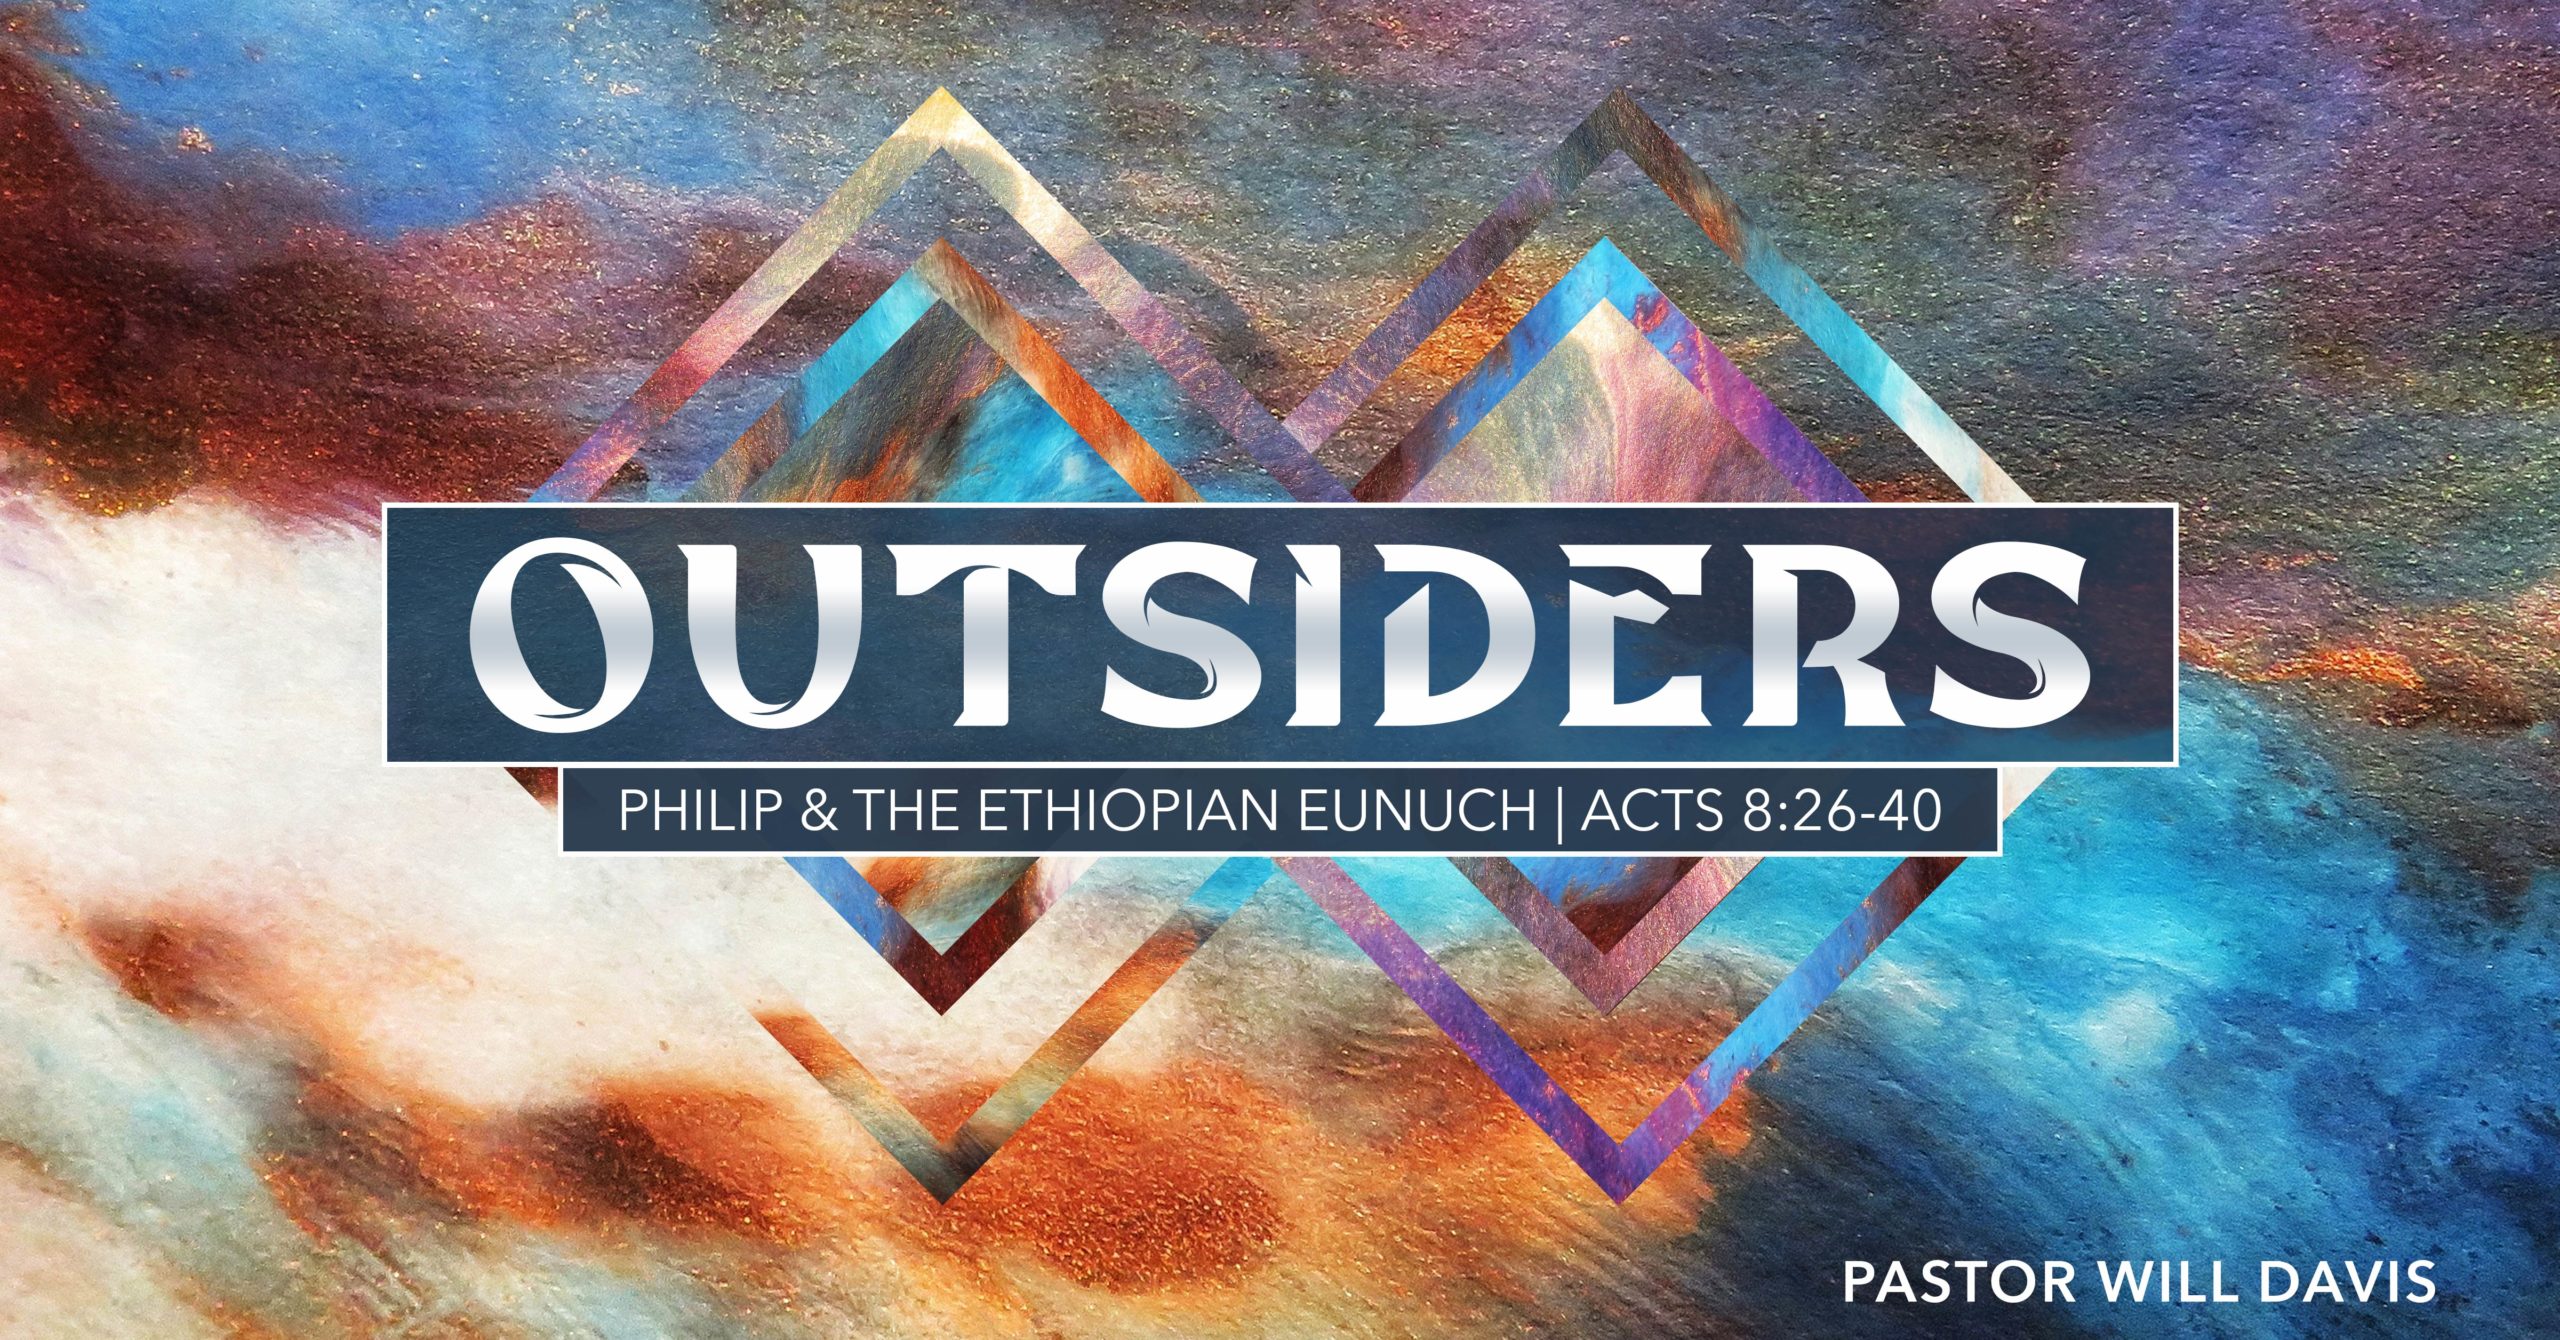 Outsiders: Philip & the Ethiopian Eunuch